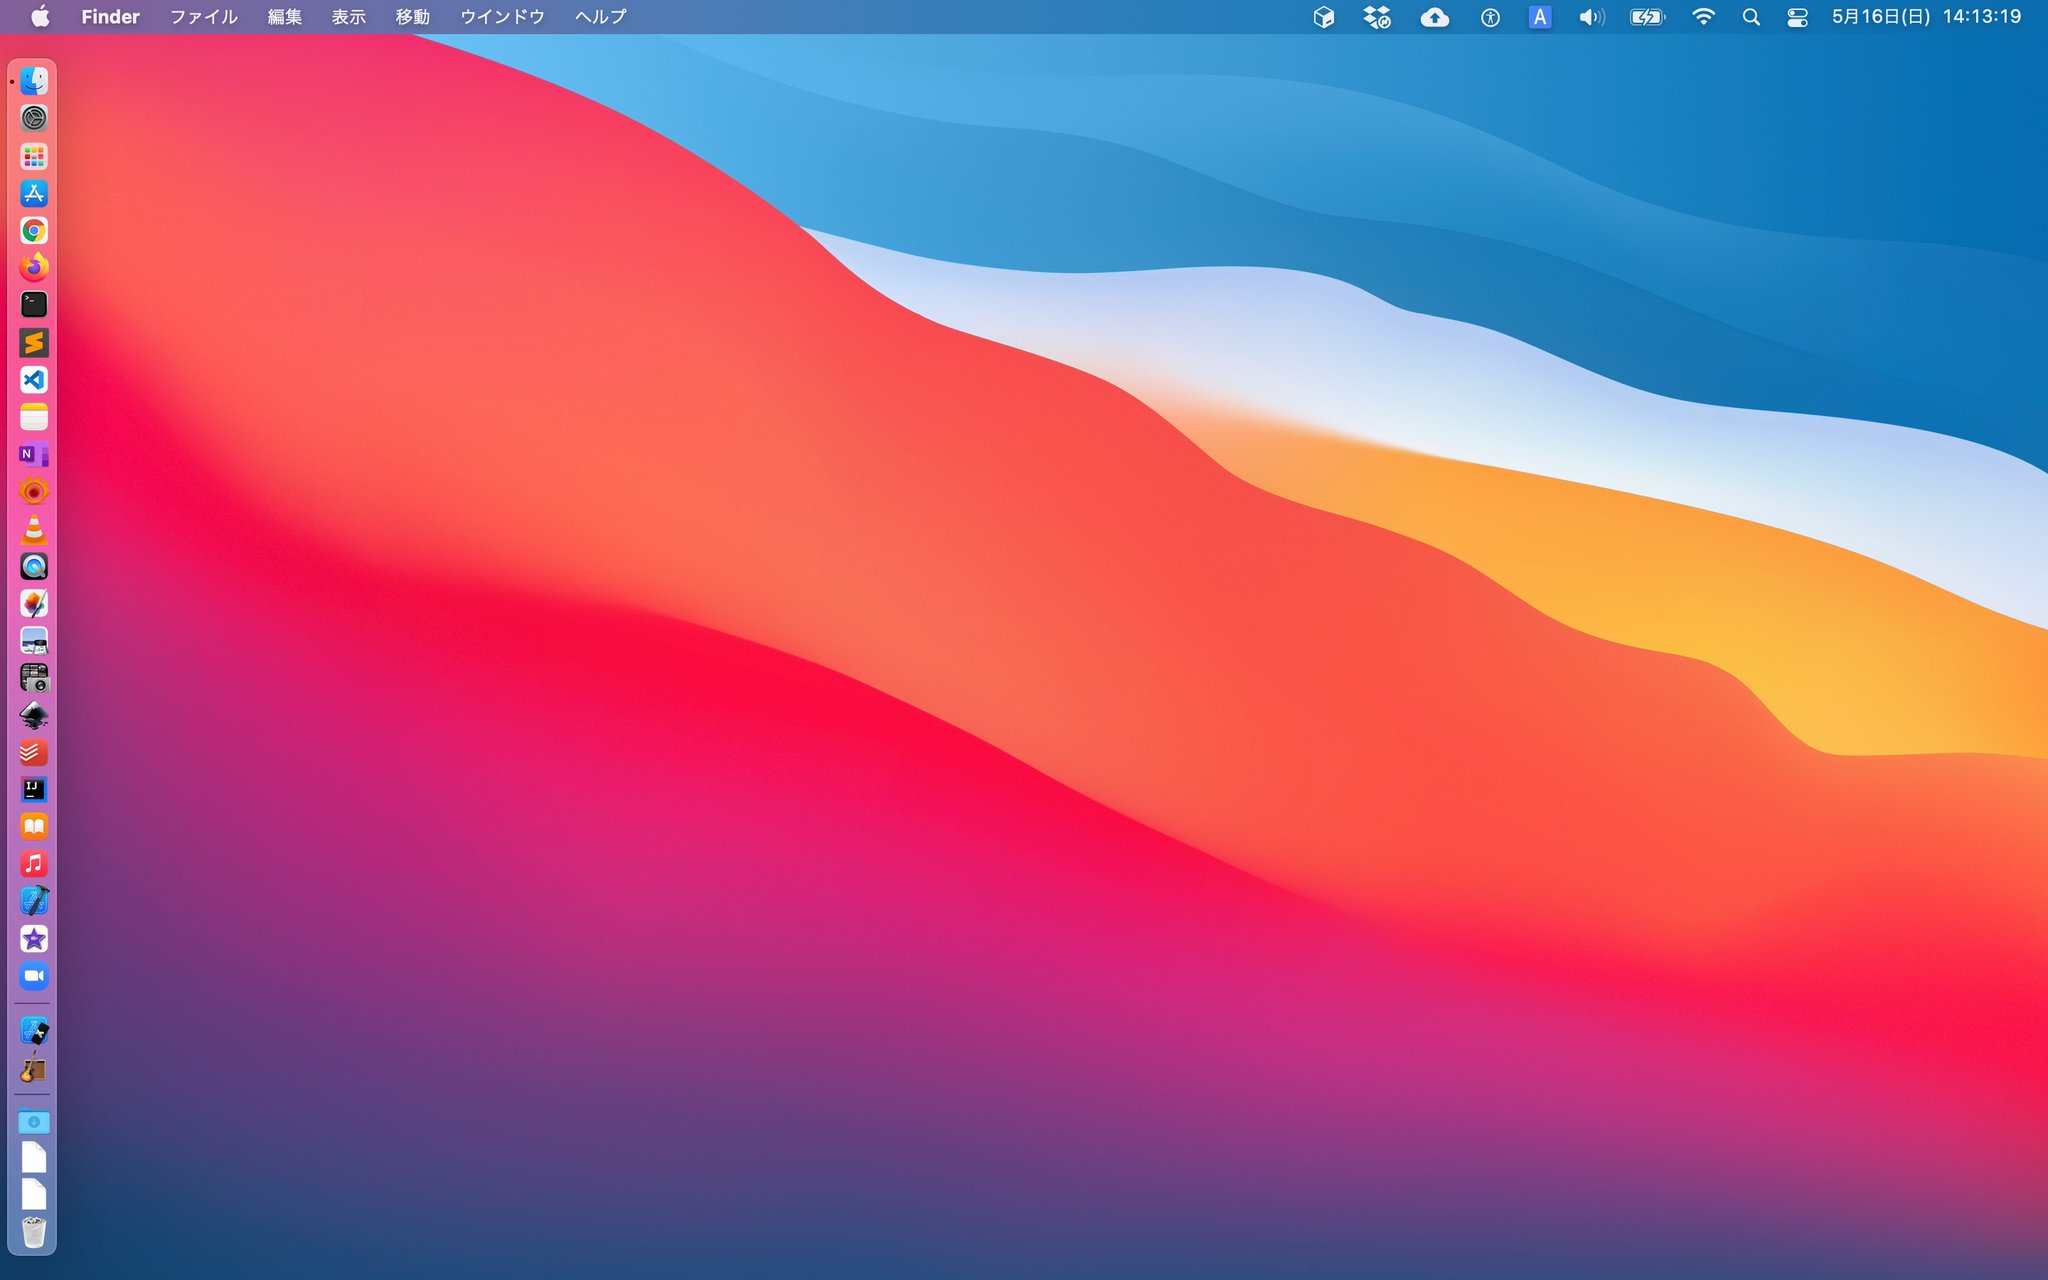 MacBook Air (Retina, 13-inch, 2020) を macOS Big Sur 11.3.1 にアップグレード完了。所要時間は1時間半弱。 https://t.co/O5E9rwJeDm